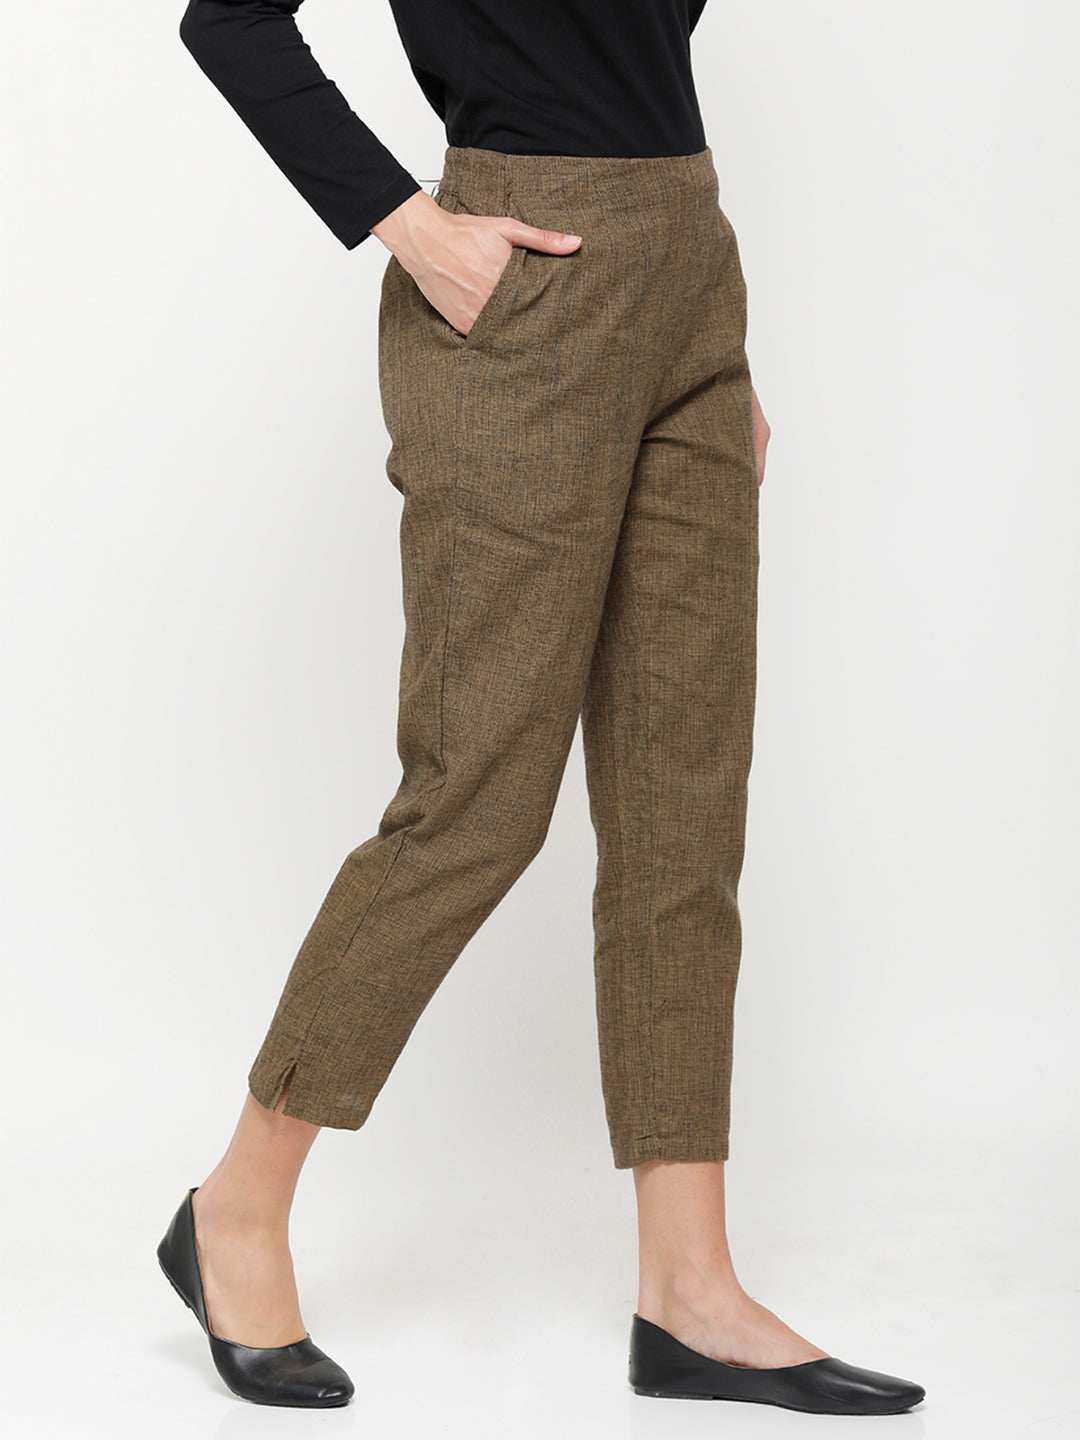 PT TORINO wool trousers 'Gentleman Fit' grey-brown | BRAUN Hamburg